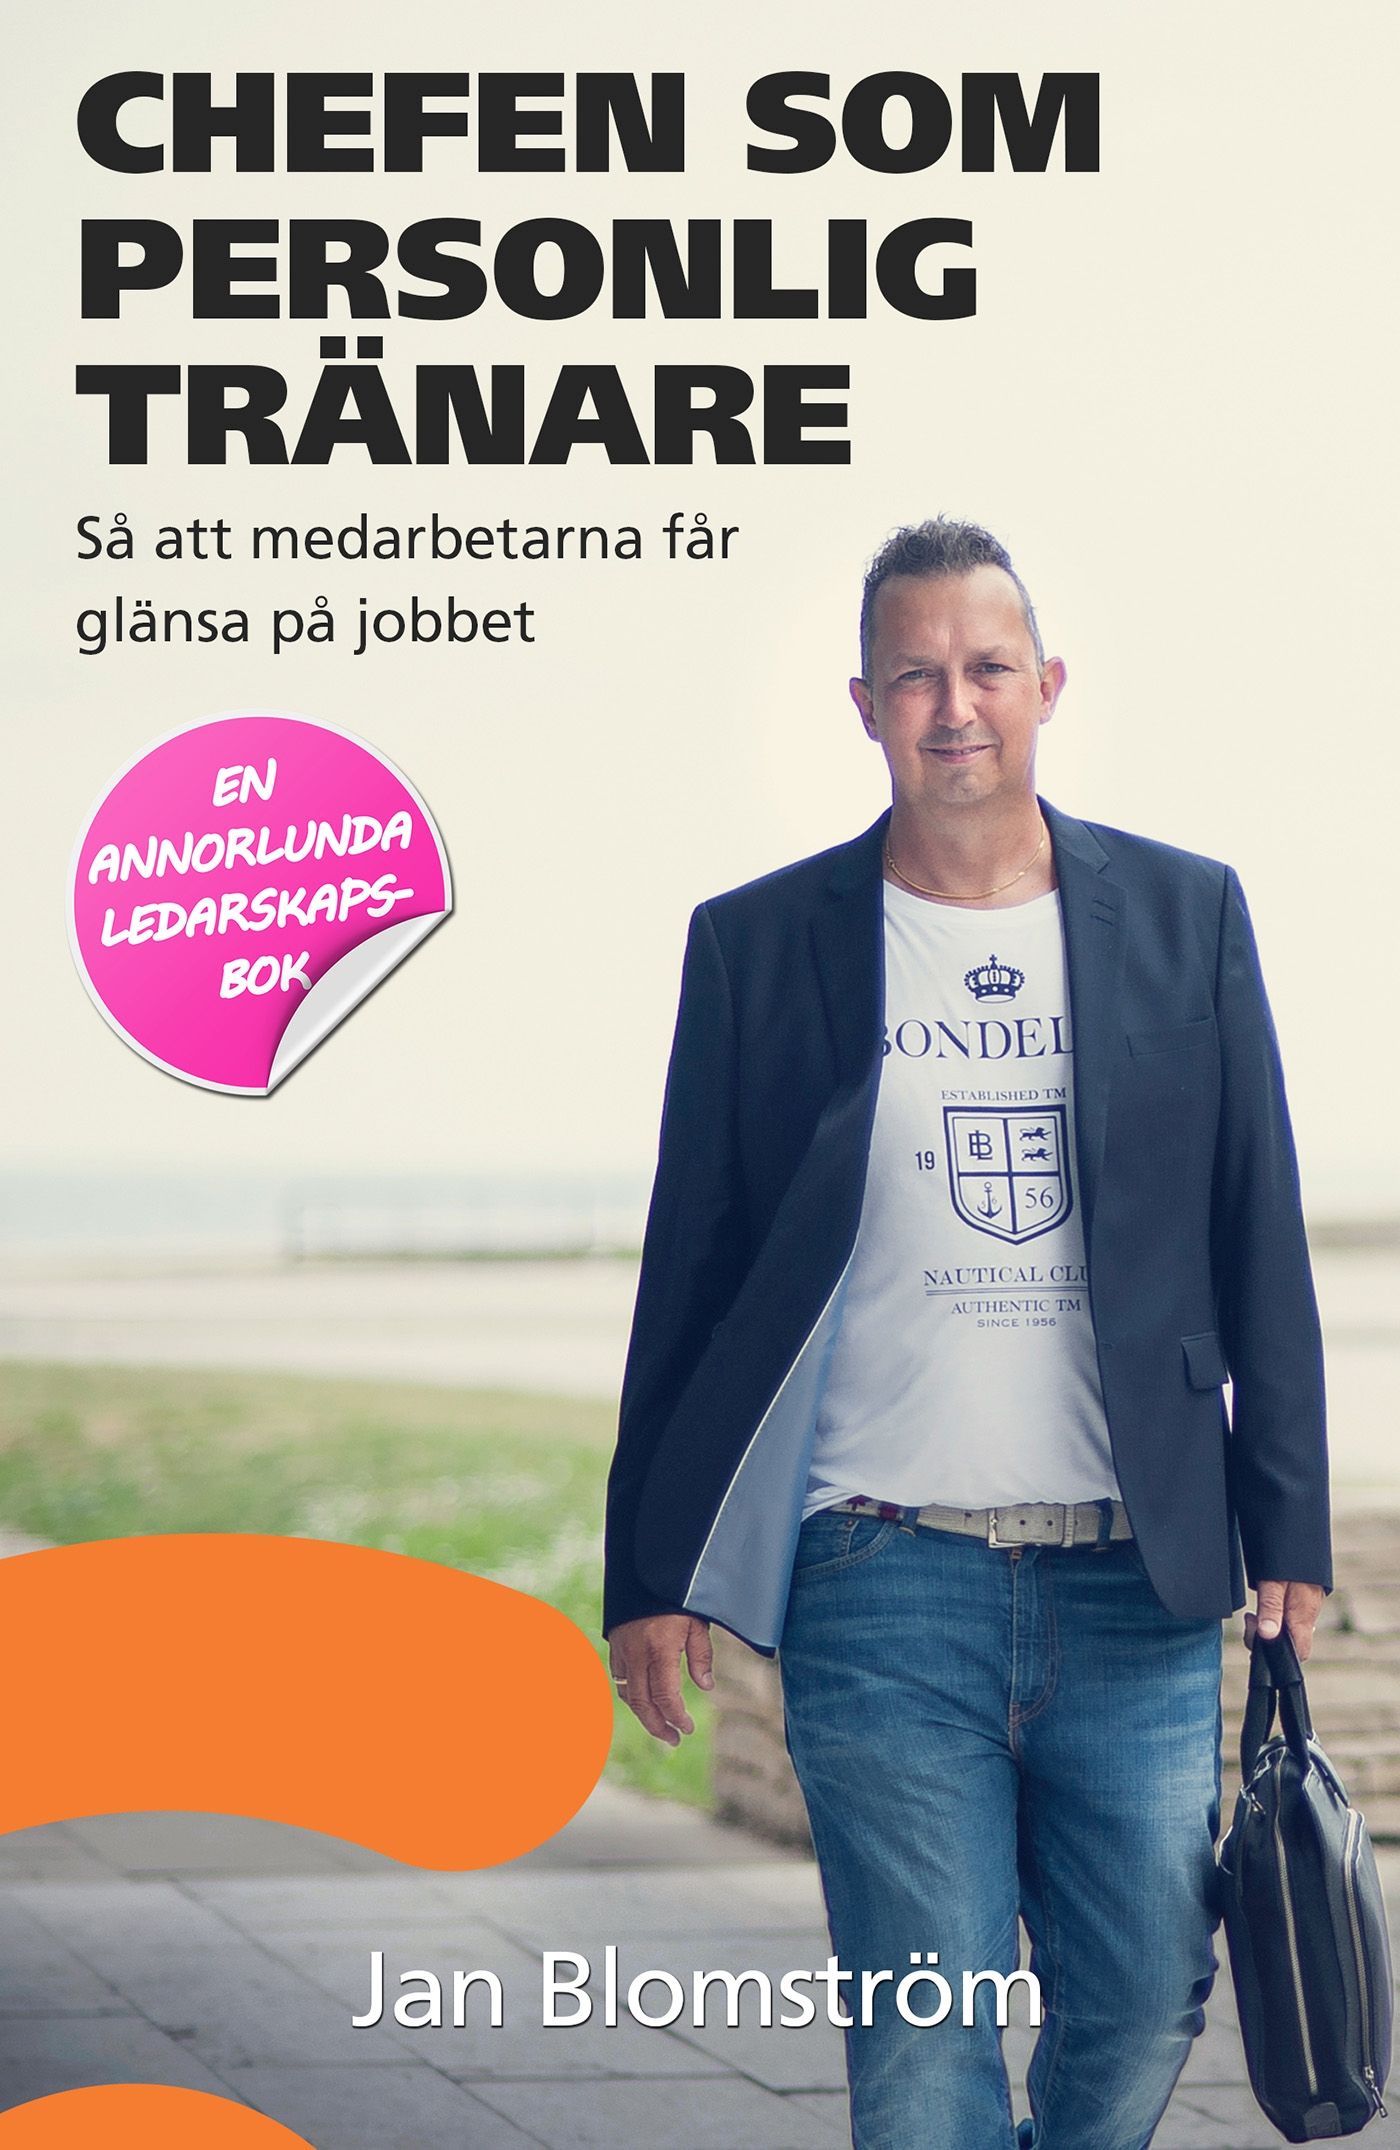 Chefen som personlig tränare, eBook by Jan Blomström